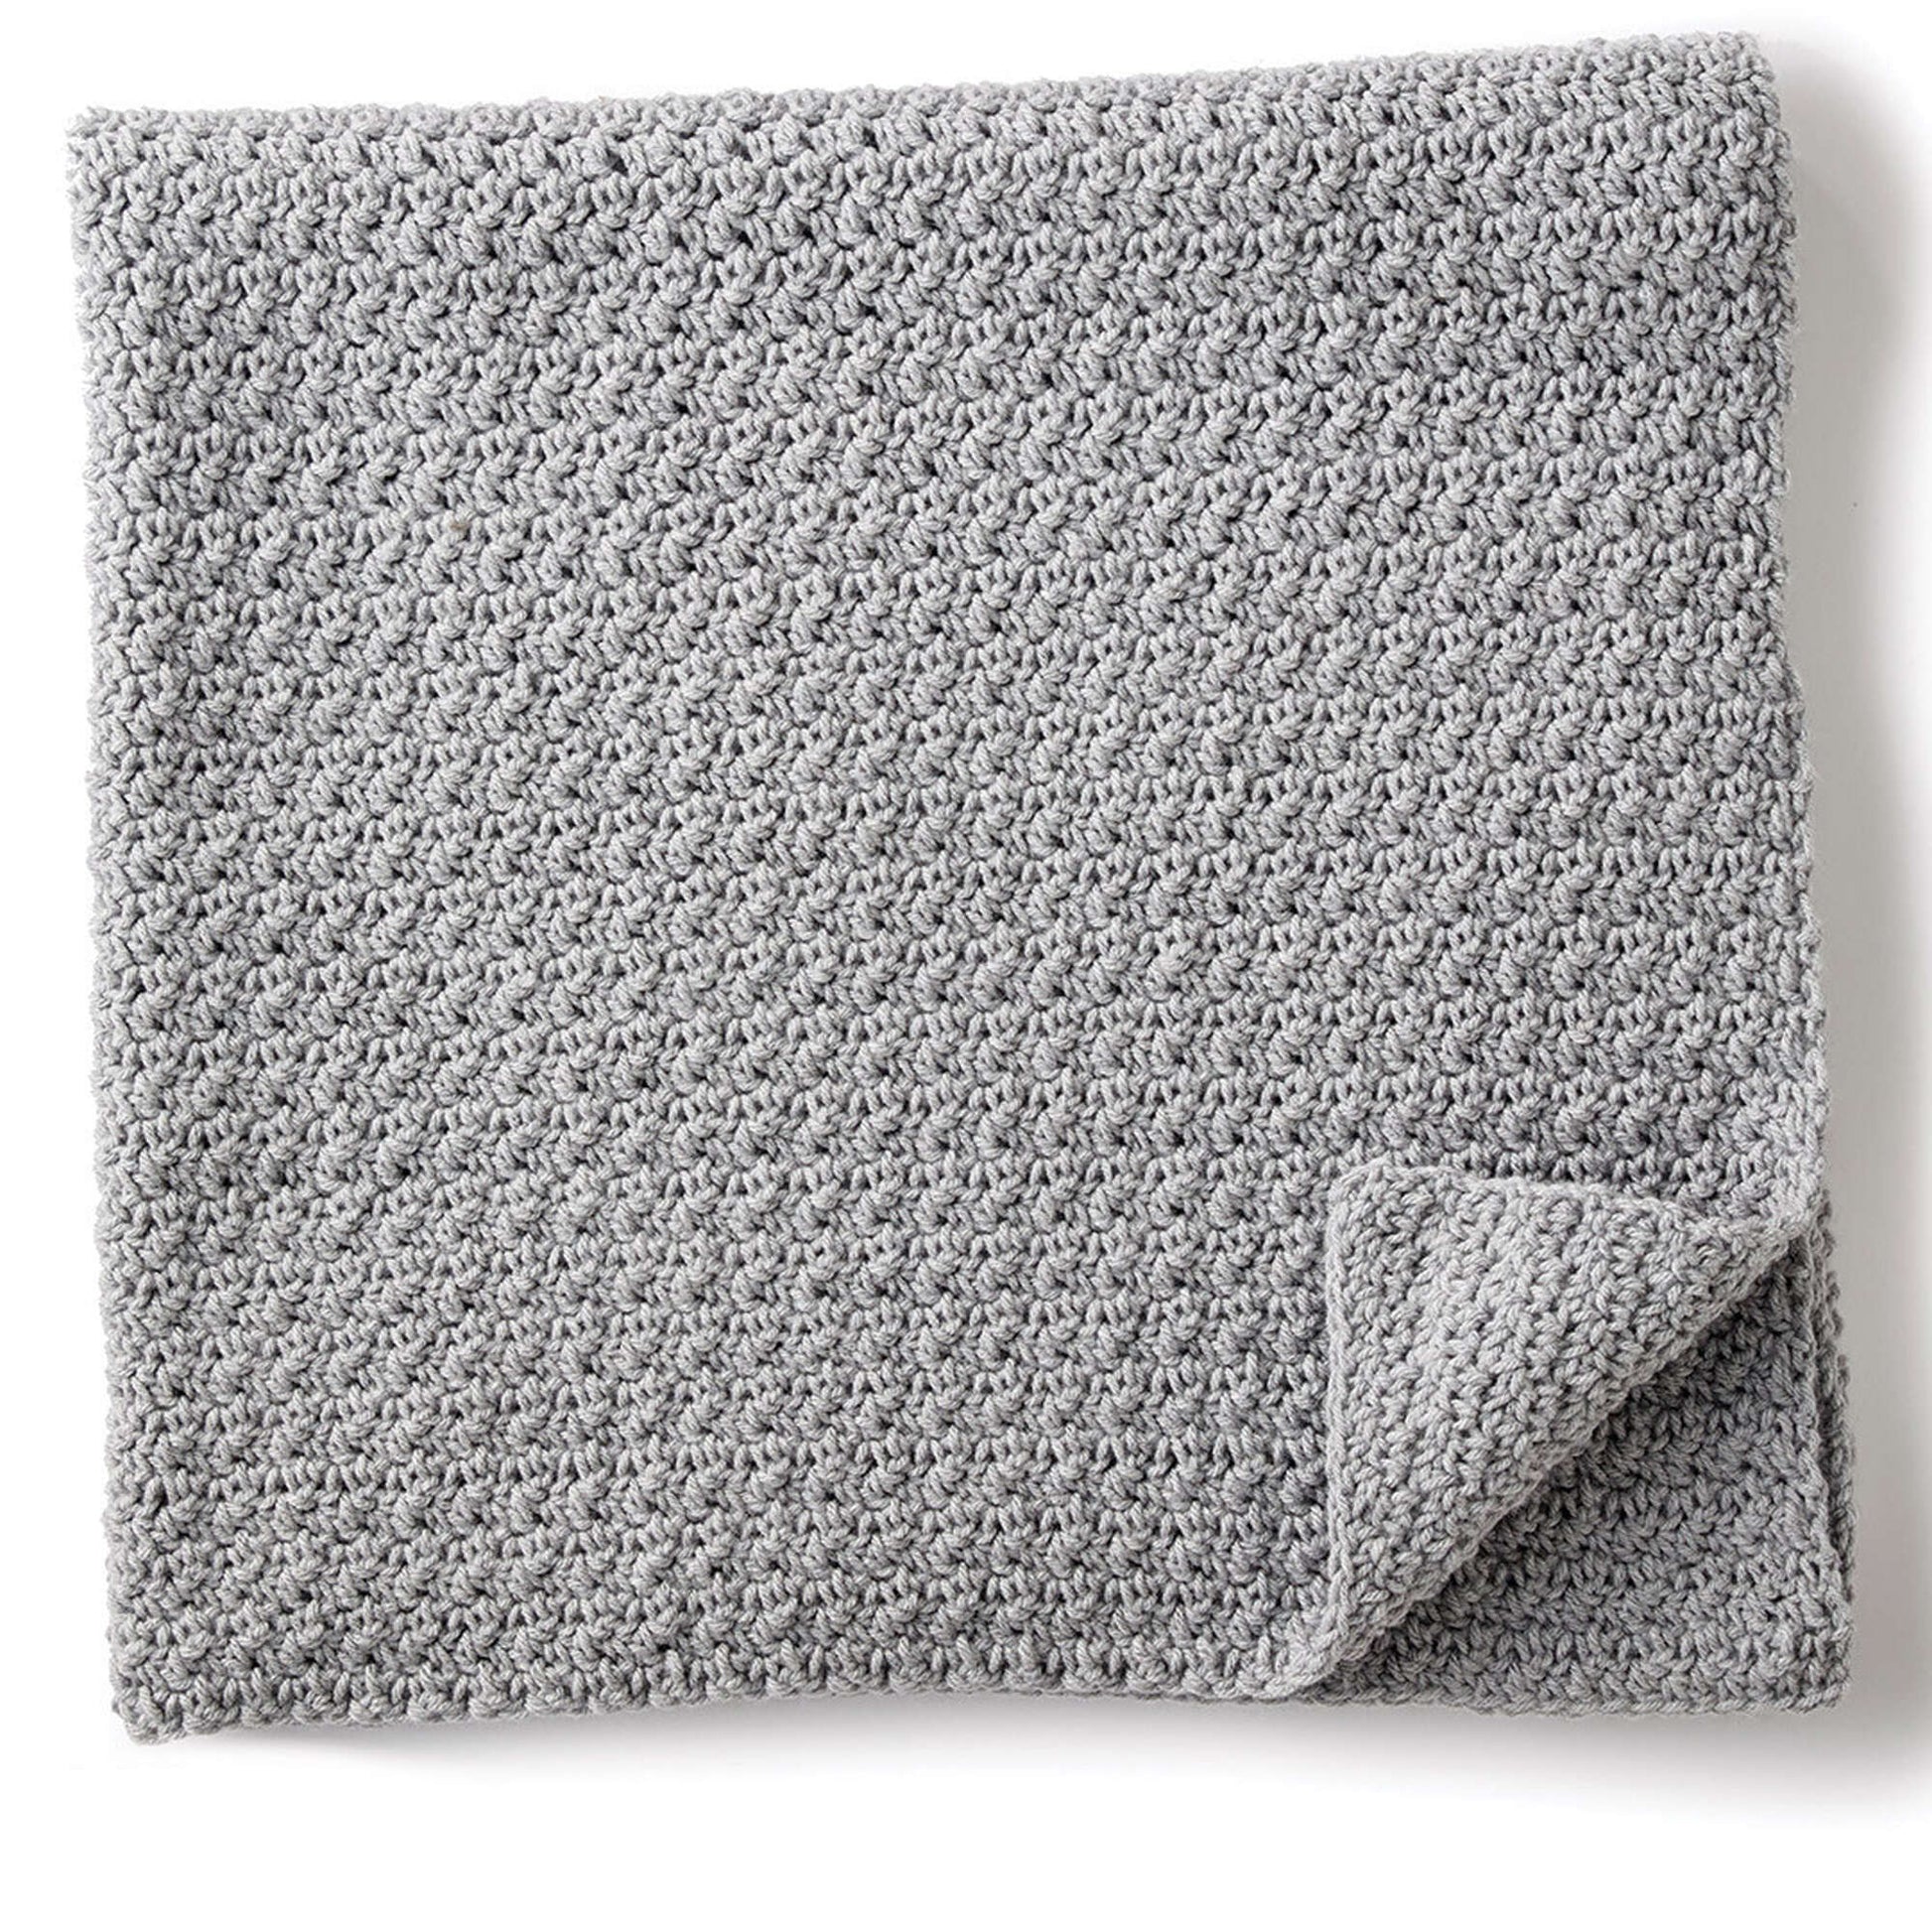 Free Caron Crochet Snuggle Pet Blanket Pattern